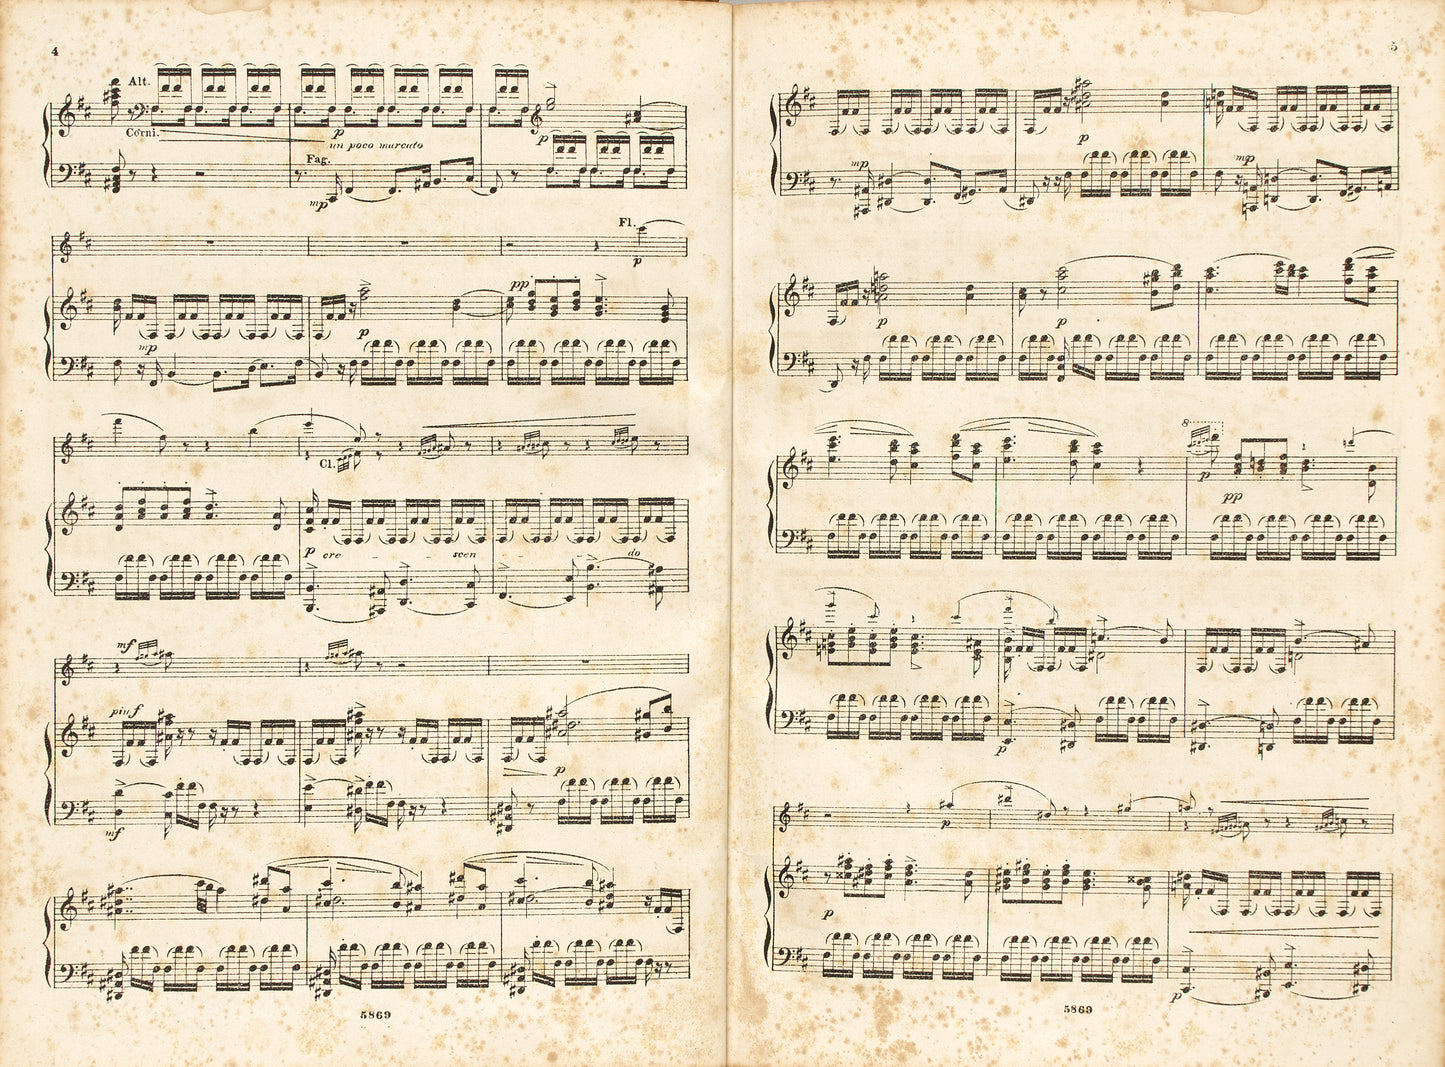 Mazeppa: Opera in three acts. Rare printed musical score.